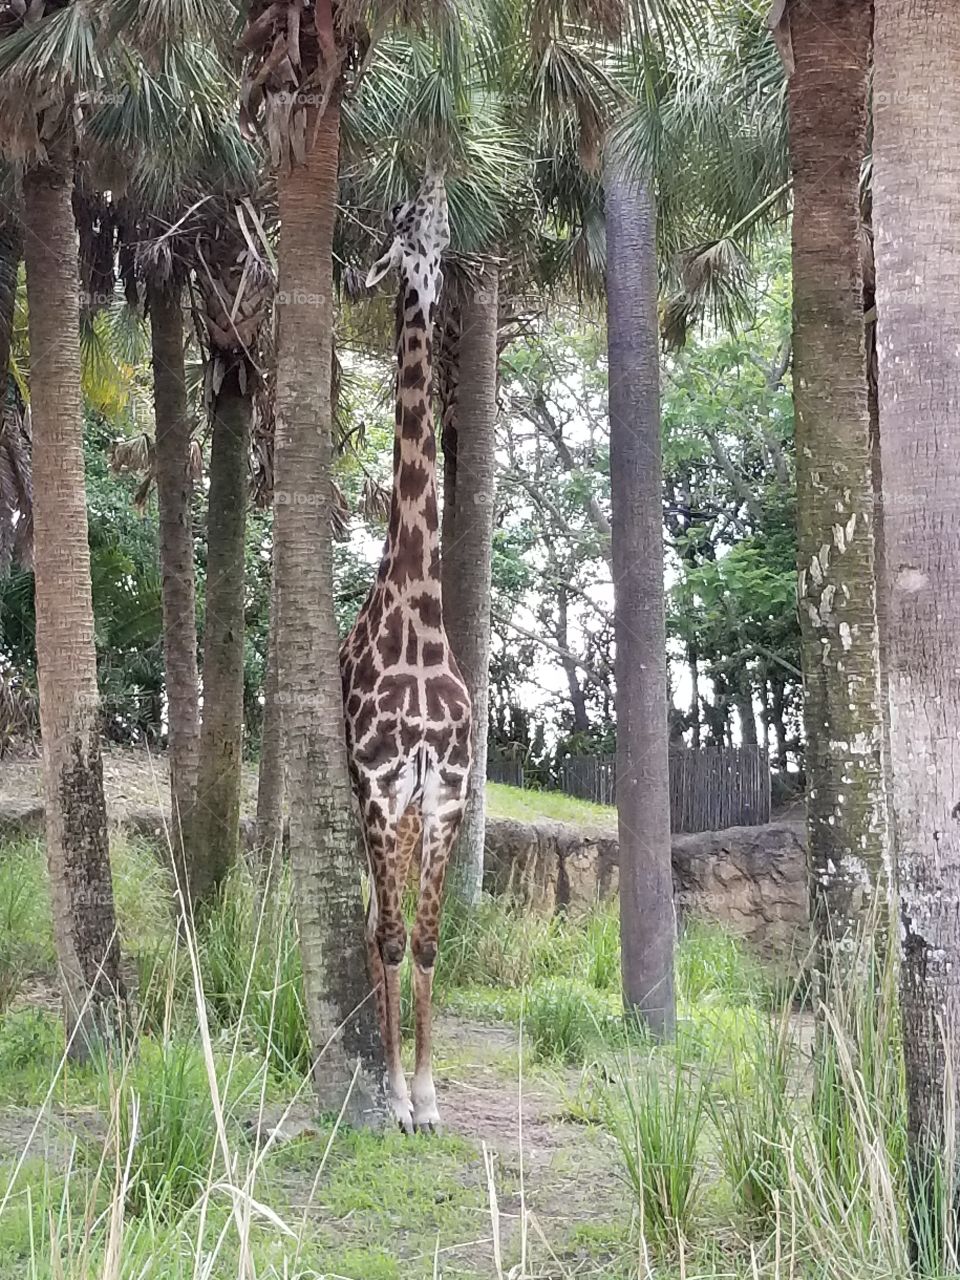 A giraffe reaches high in the trees for their lunch.